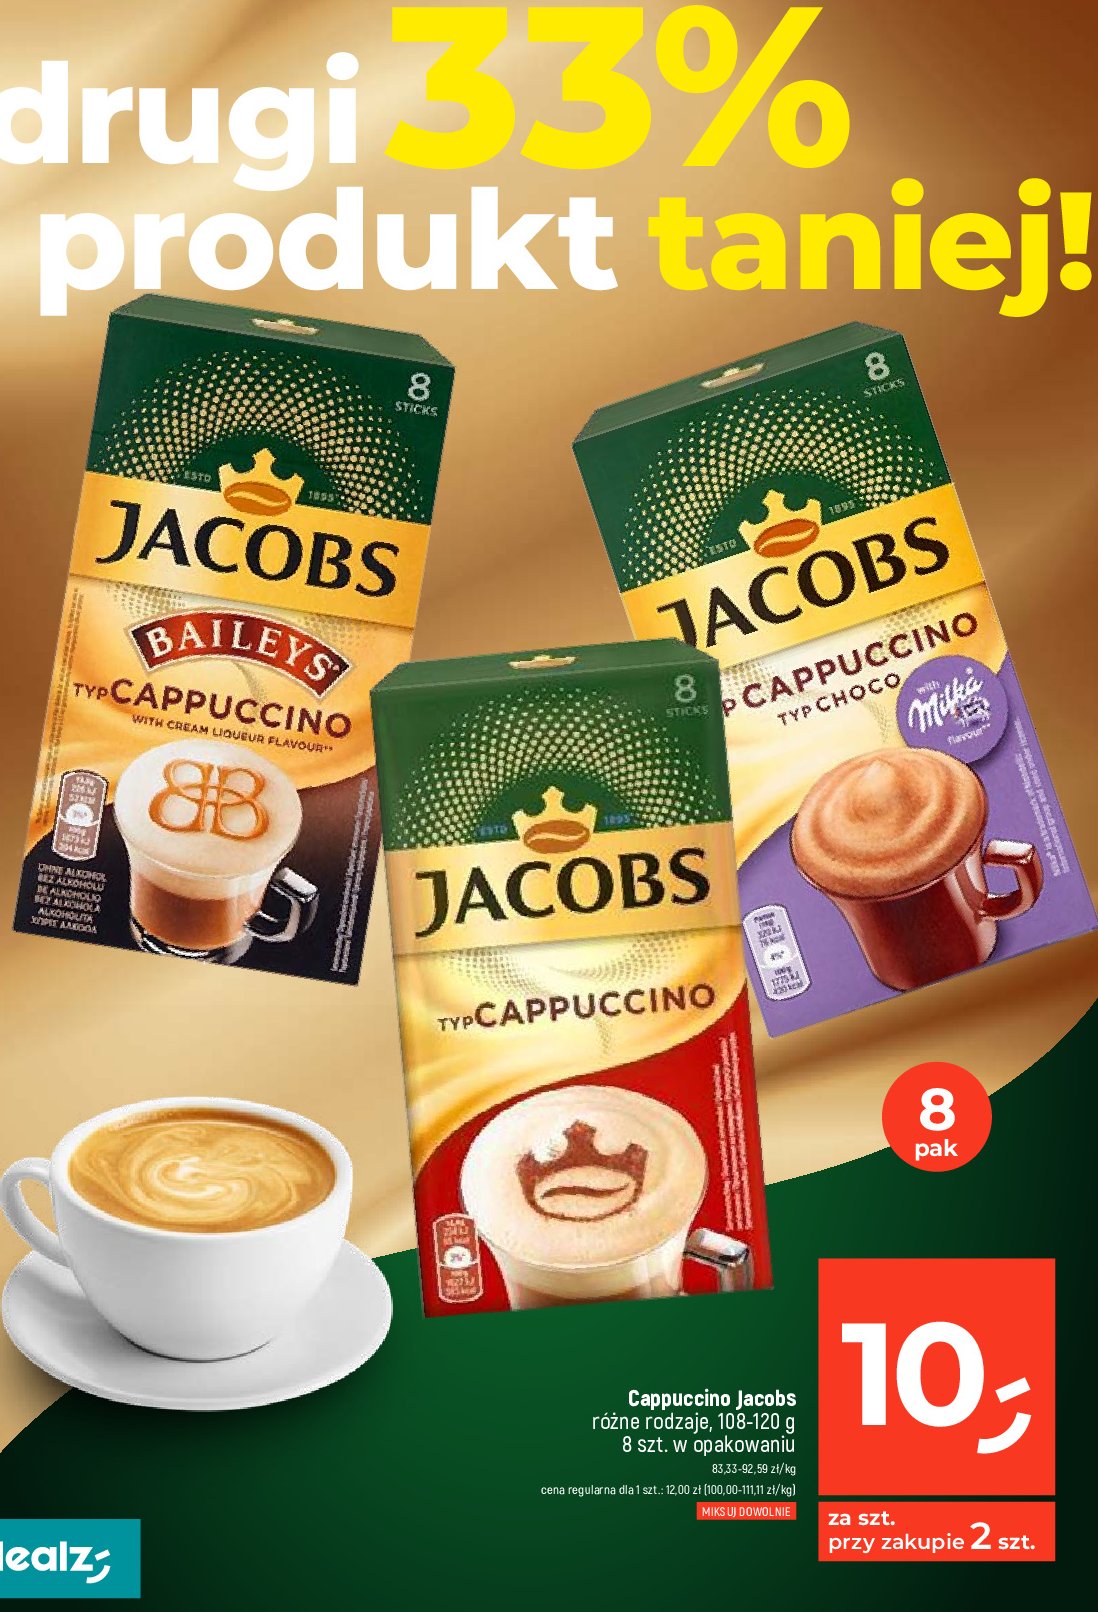 Cappucino bailey's Jacobs cappuccino promocja